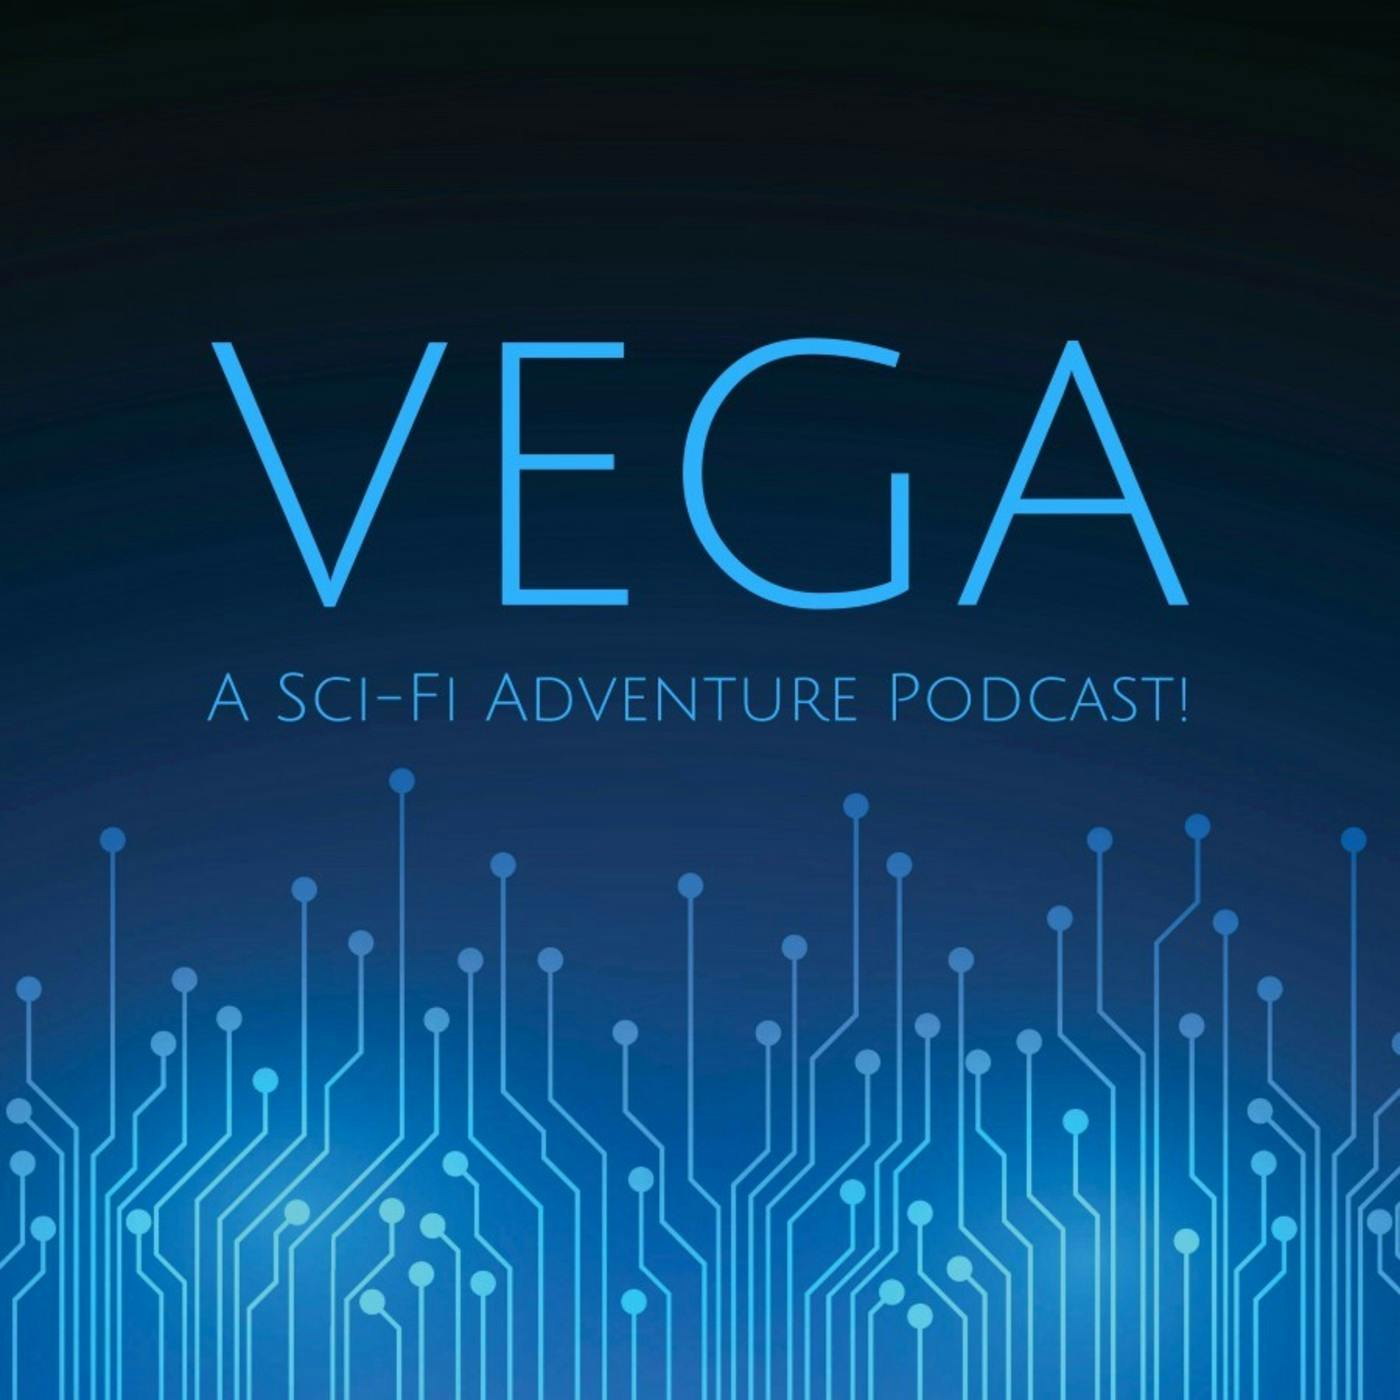 "Vega: A Sci-Fi Adventure Podcast!" Podcast